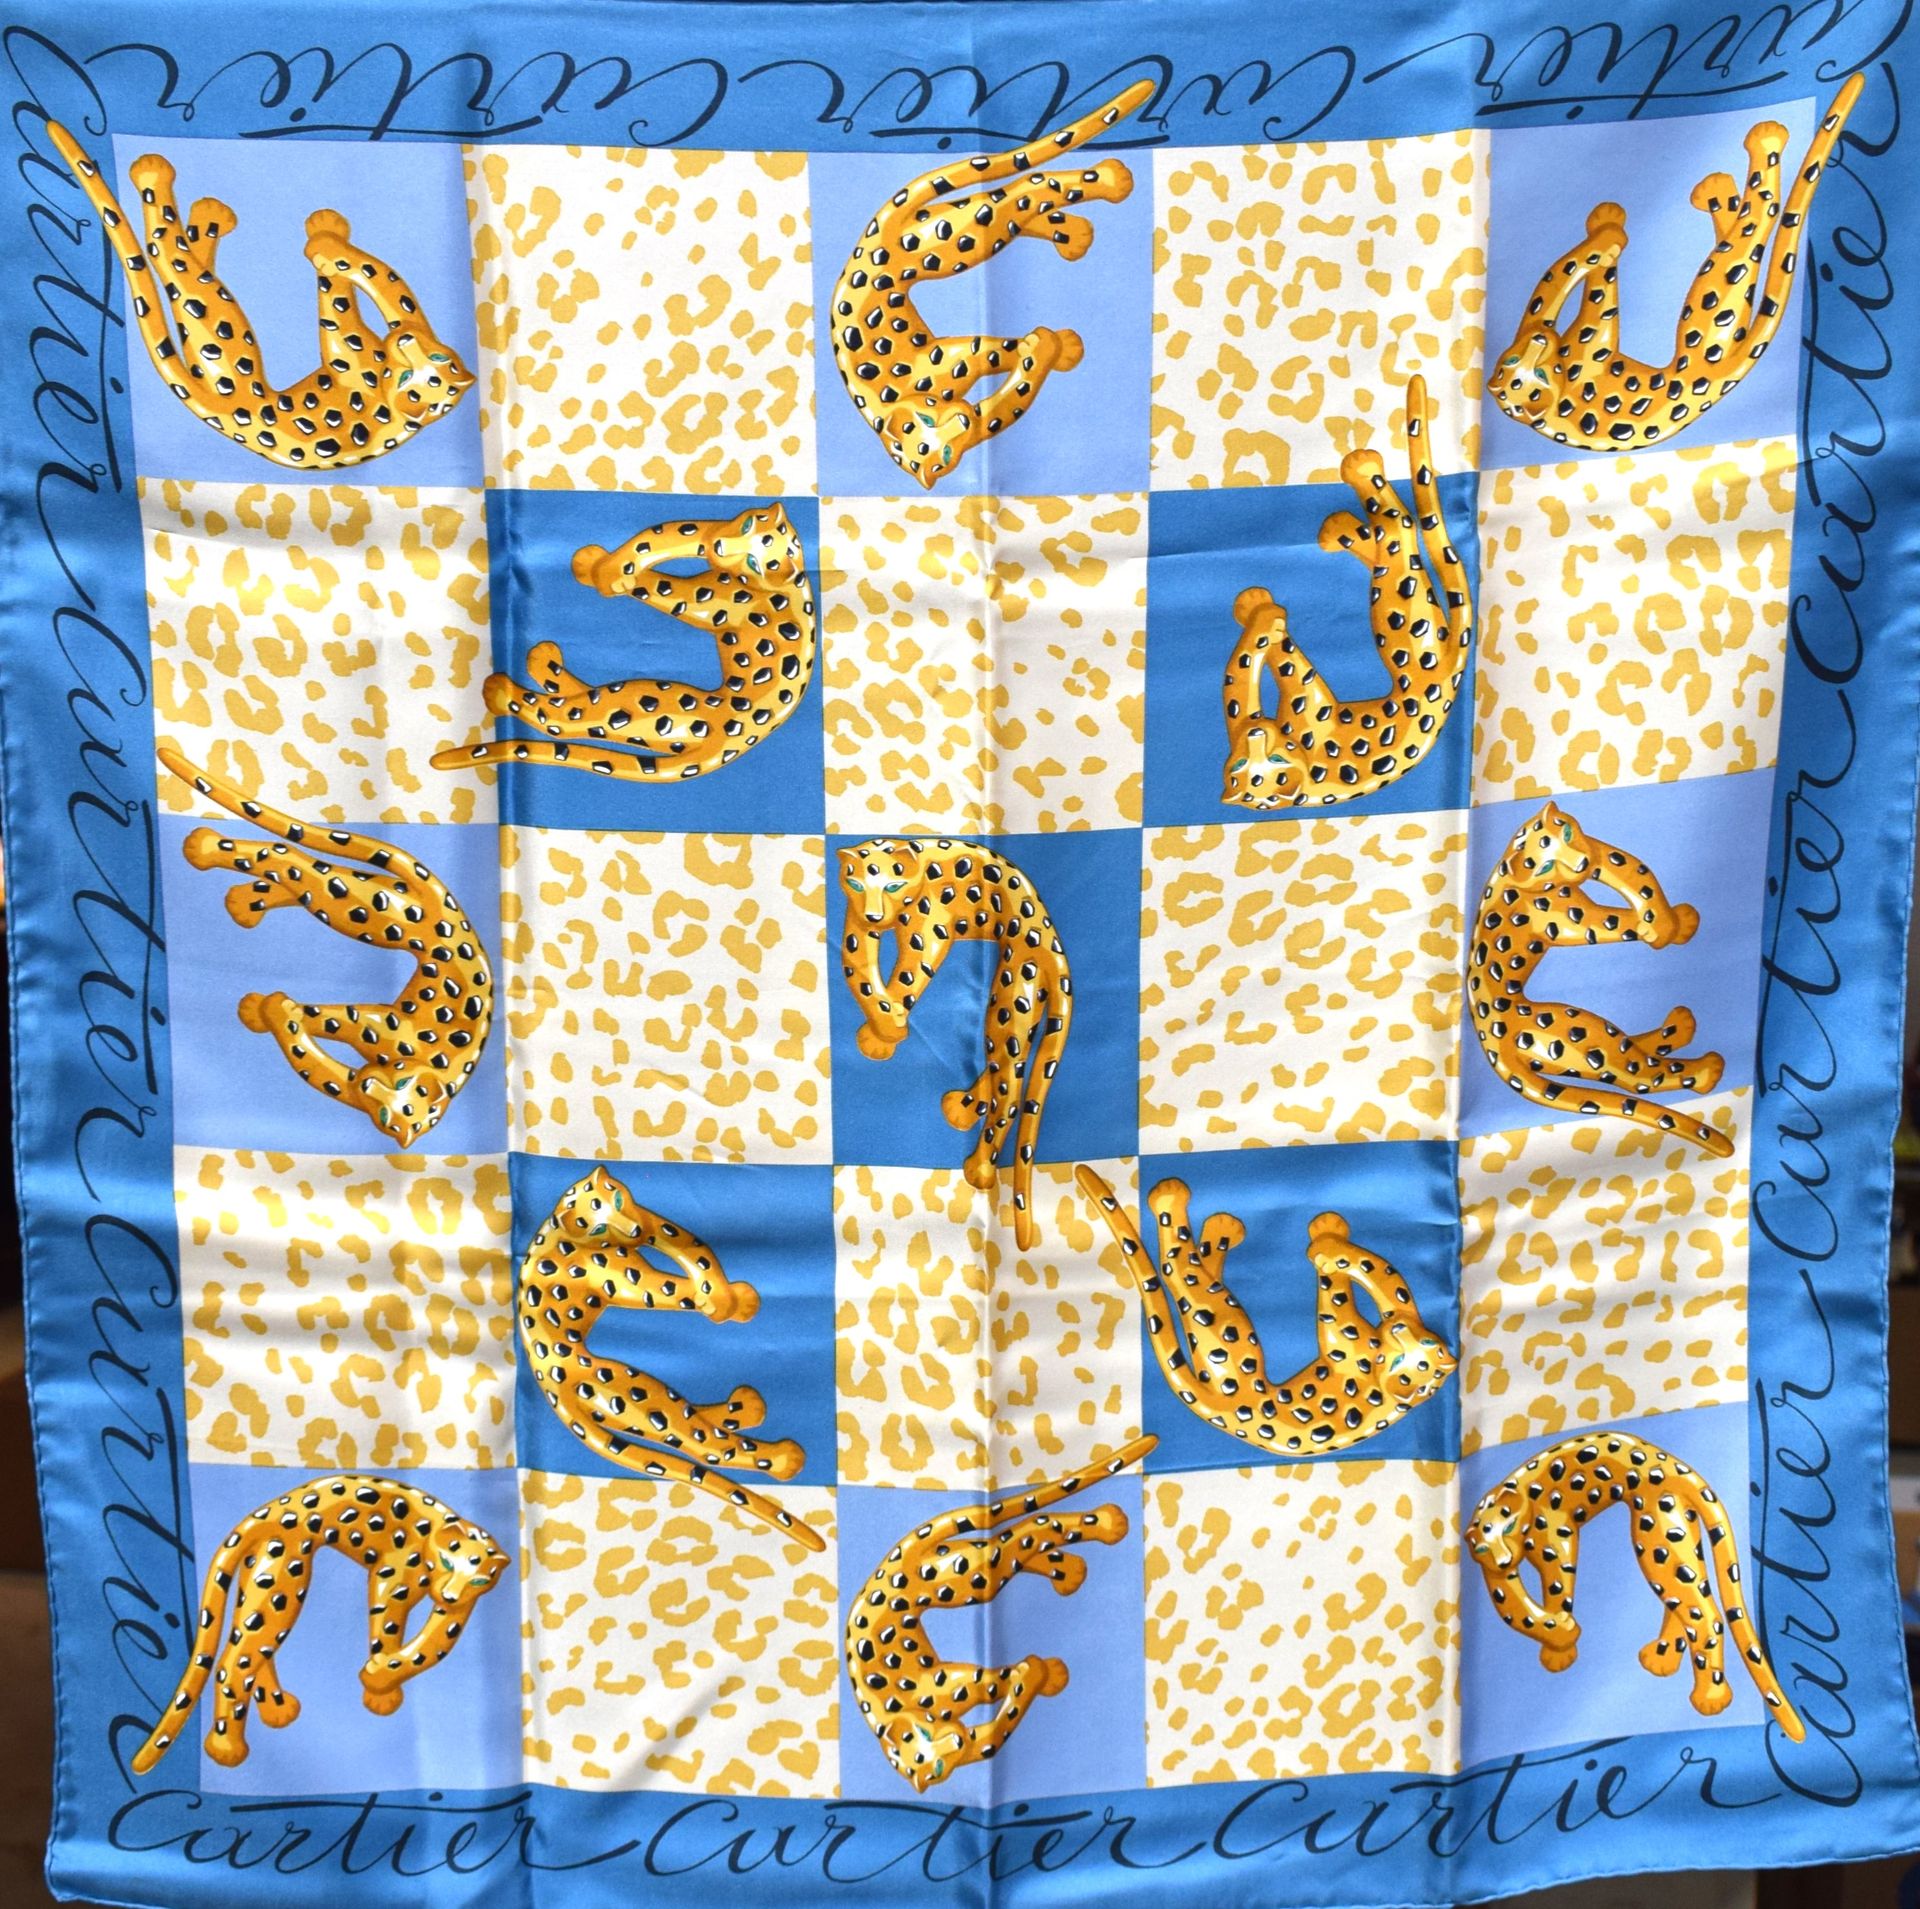 Null 卡地亚
蓝色围巾 黑豹
丝绸方形
67 x 68 厘米
盒子，真品卡